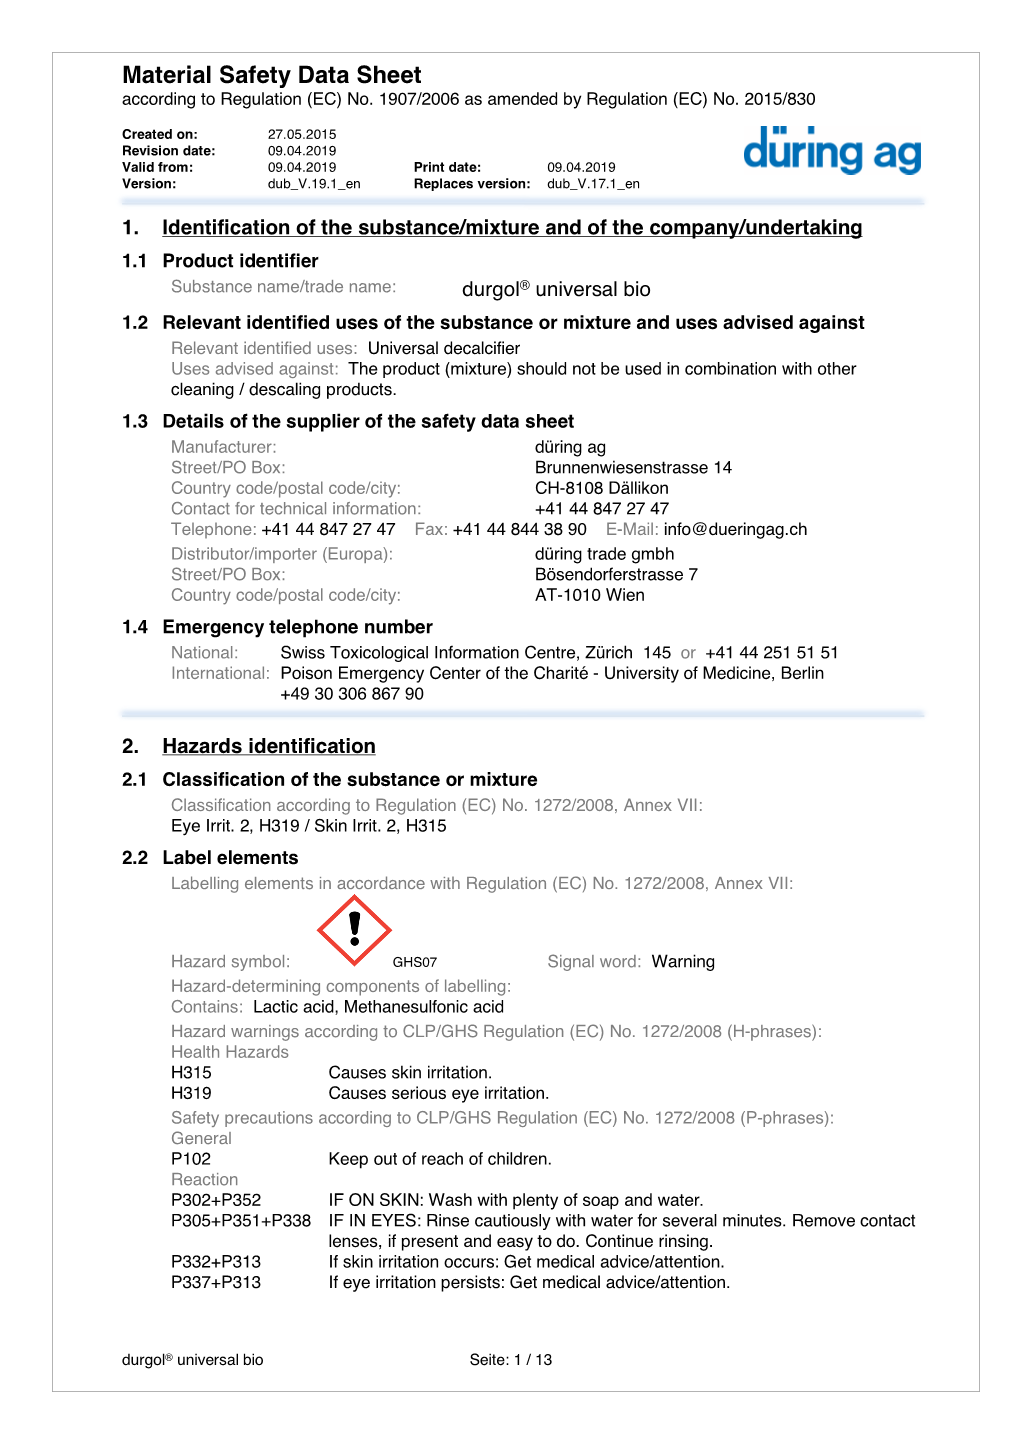 Material Safety Data Sheet According to Regulation (EC) No